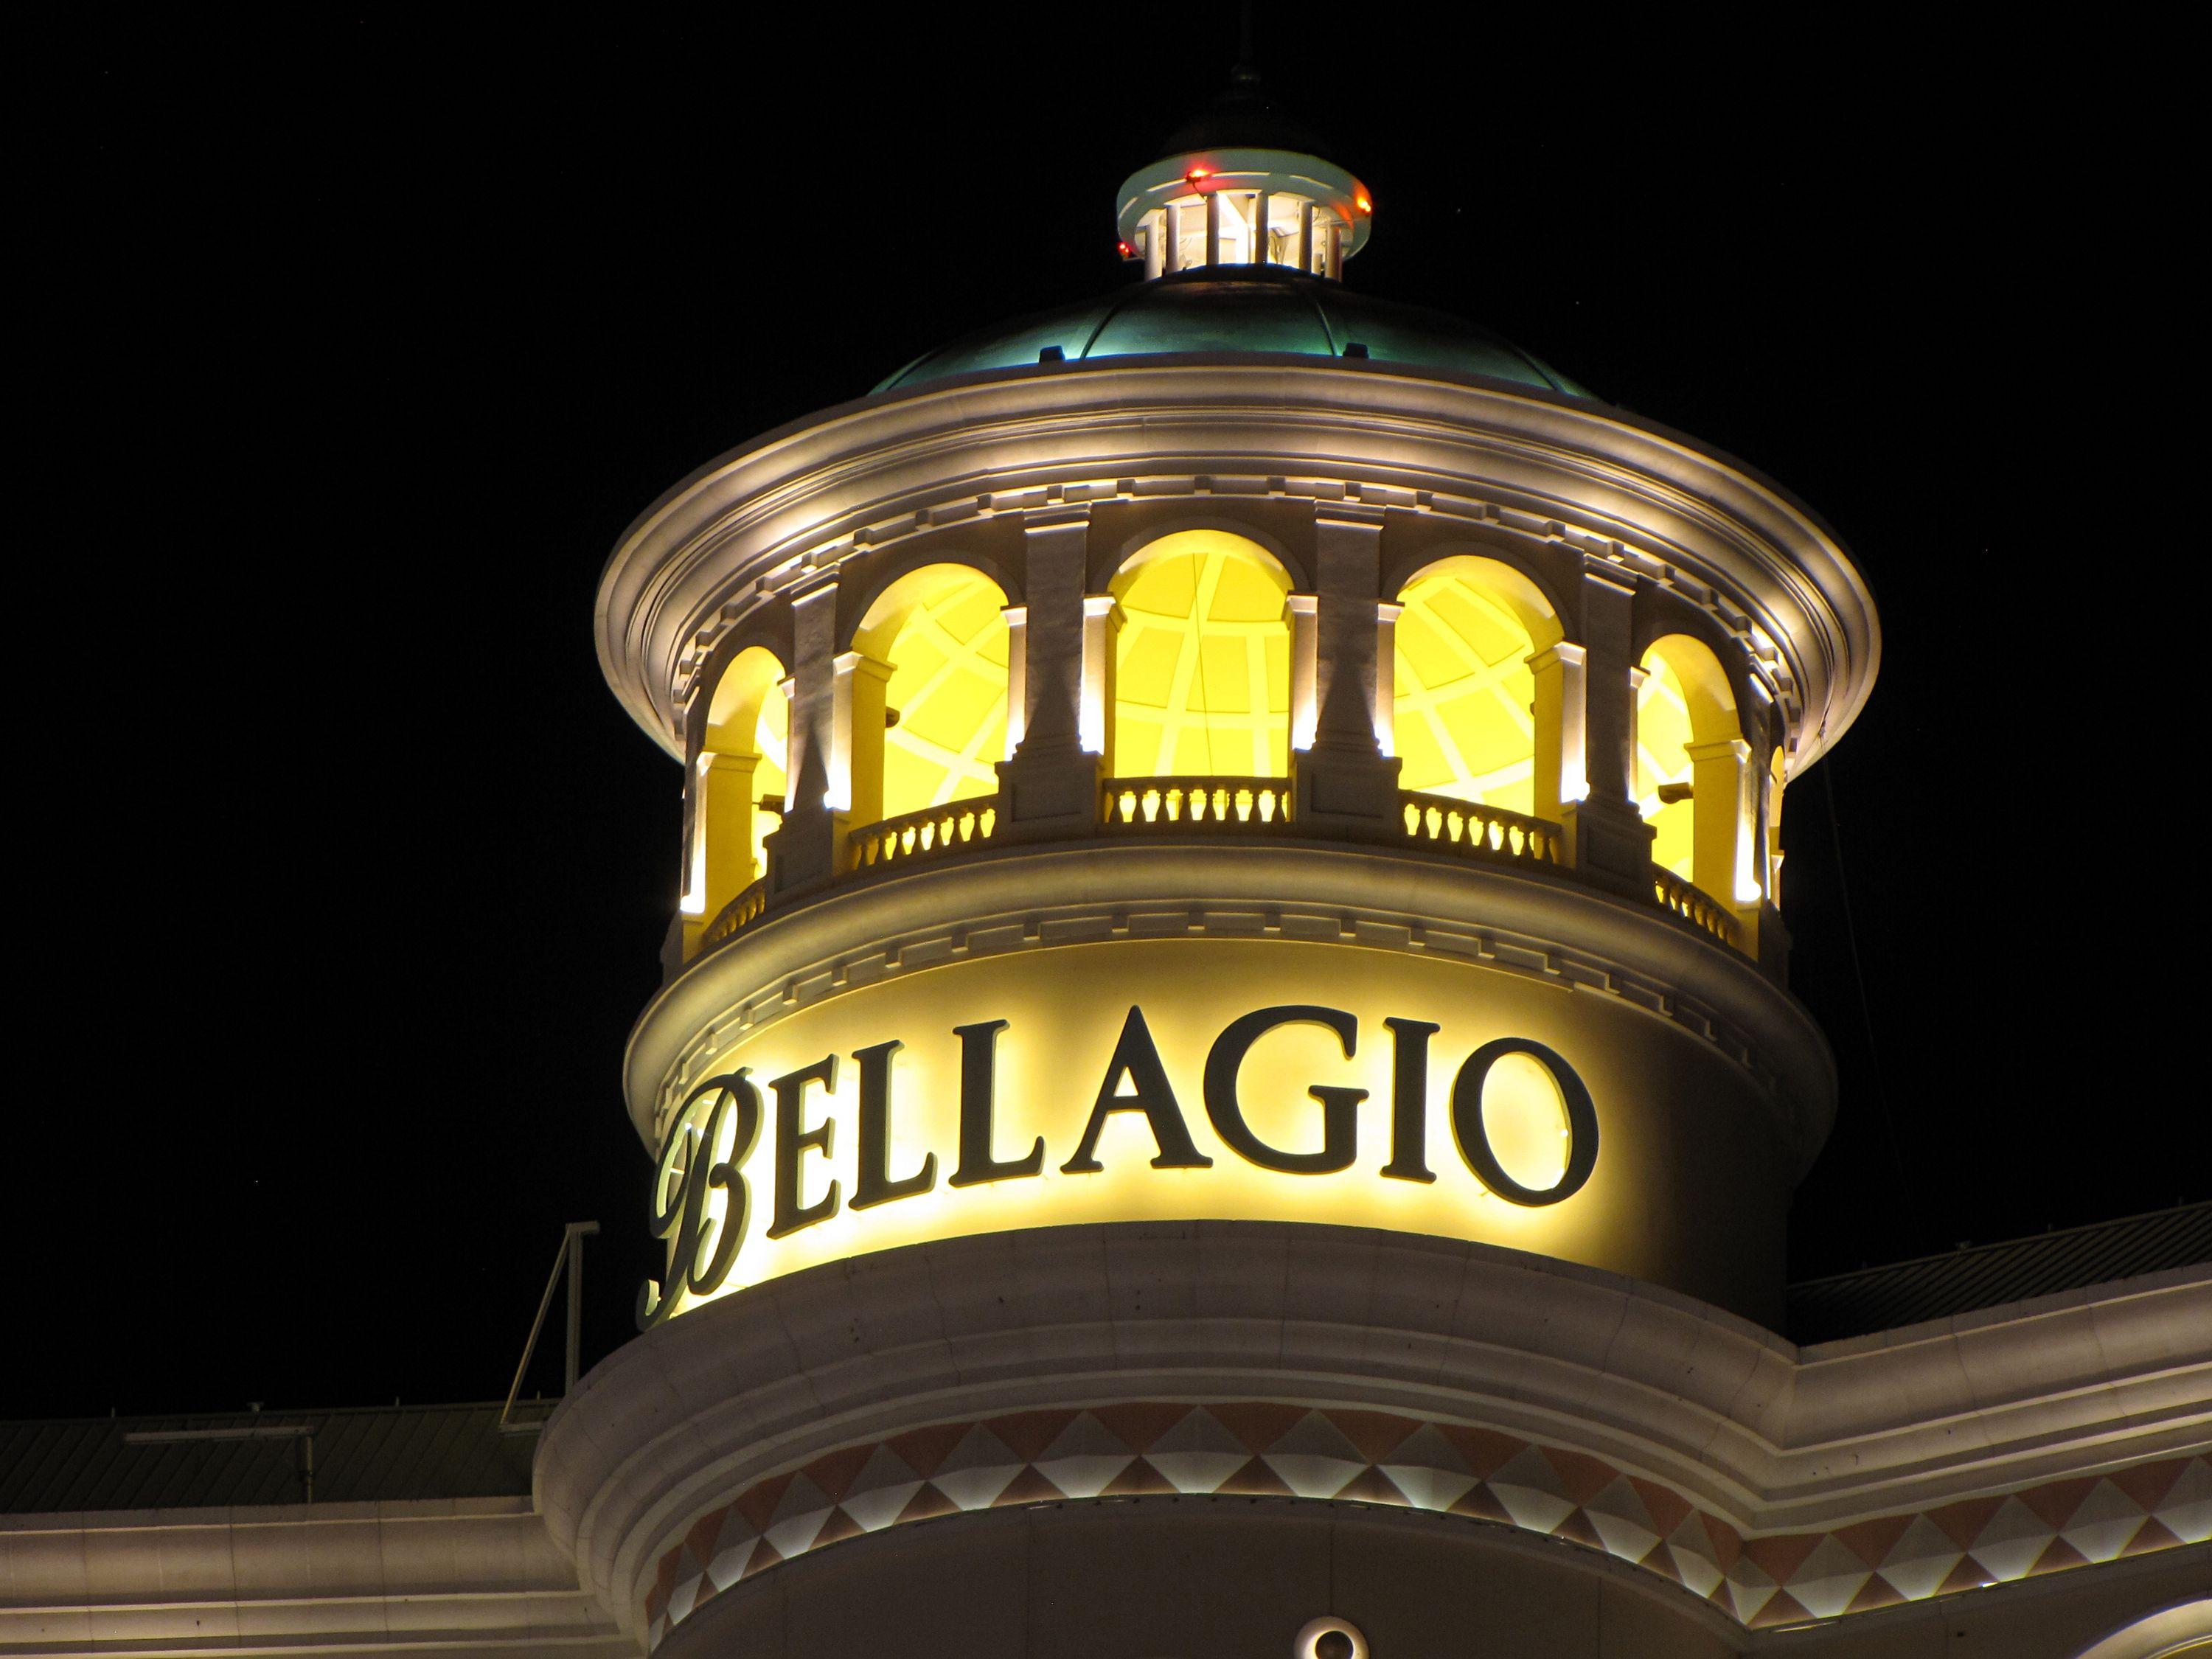 Bellagio Las Vegas Logo - File:Bellagio Las Vegas dome.jpg - Wikimedia Commons